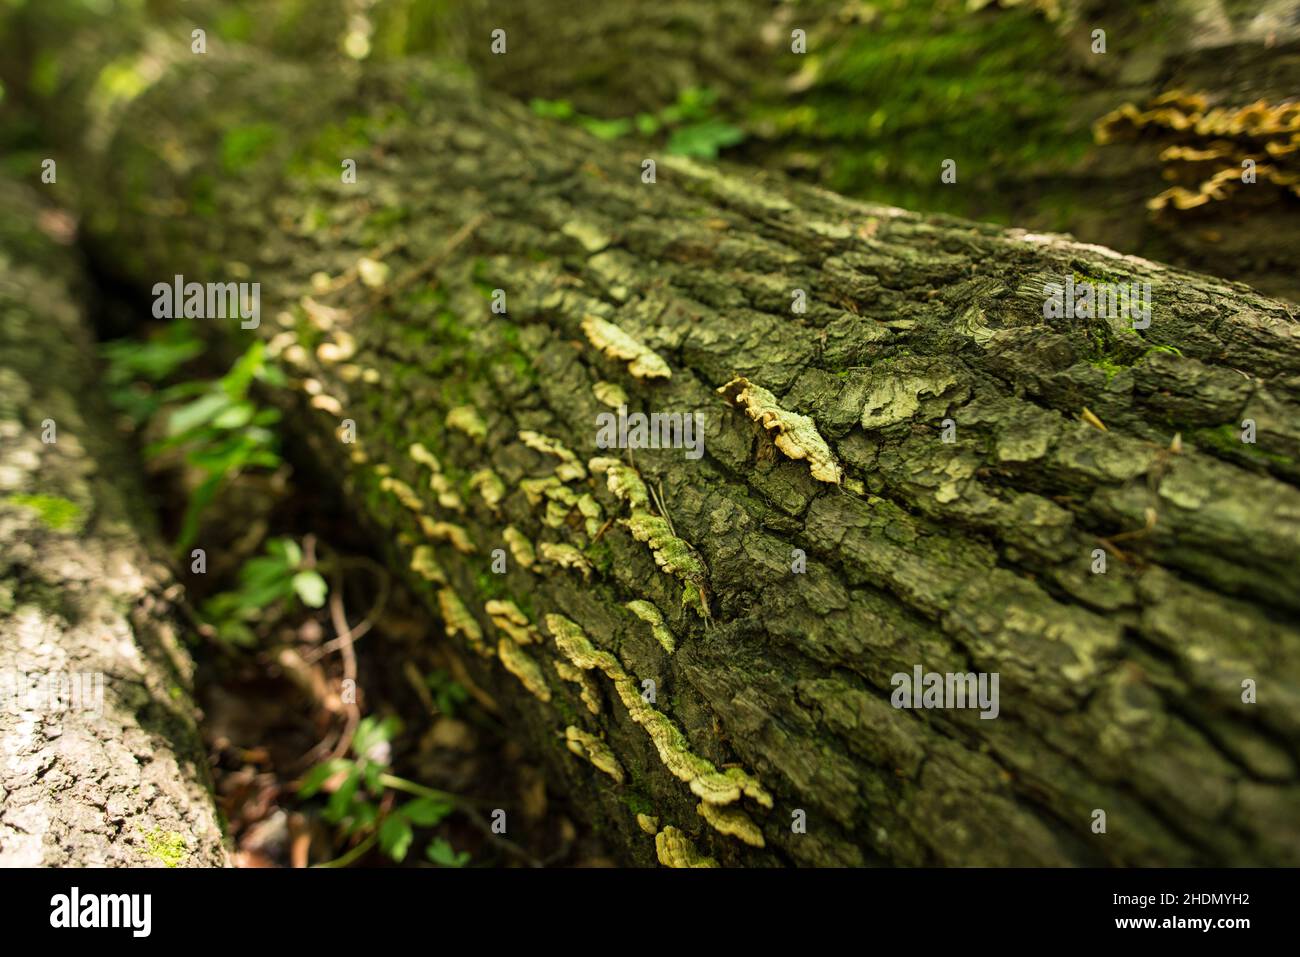 bark, deadwood, tree mushrooms, barks, deadwoods Stock Photo